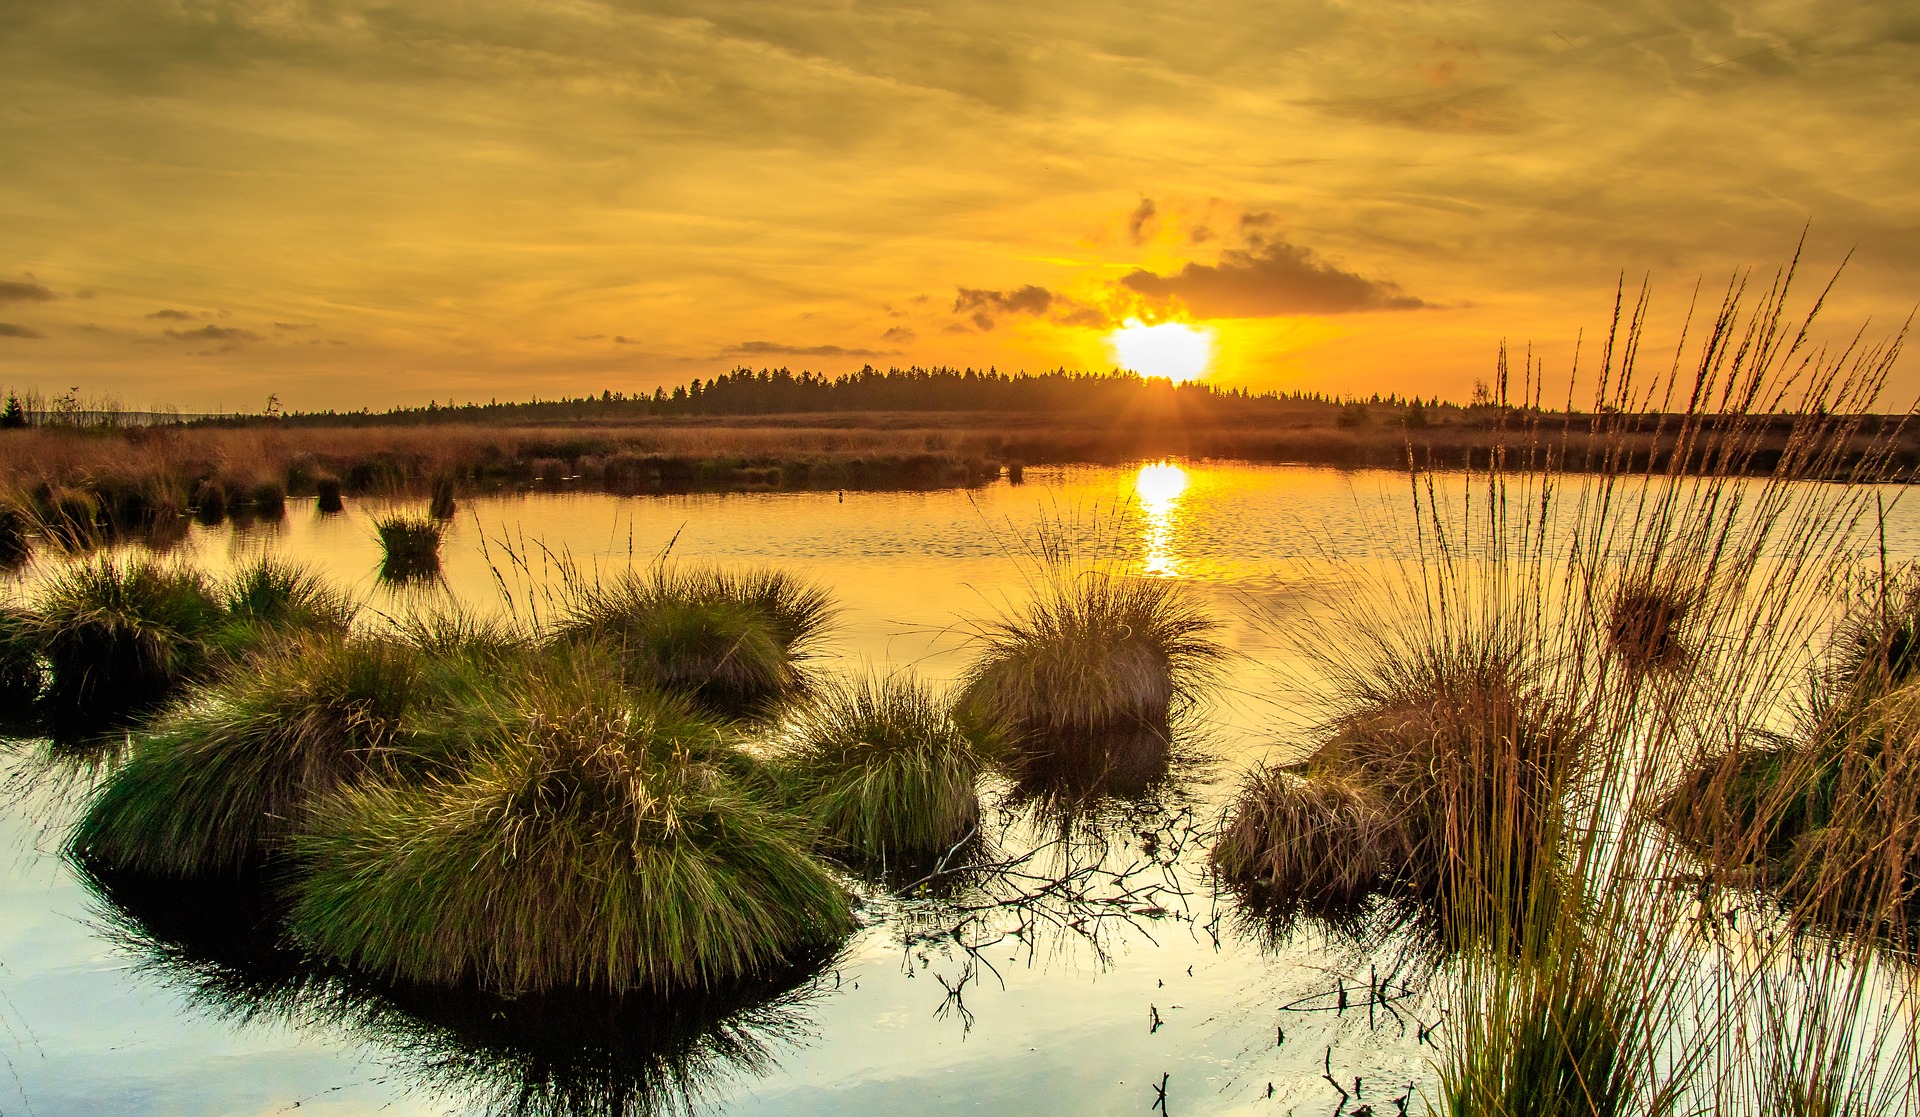 Sunset over a peatland